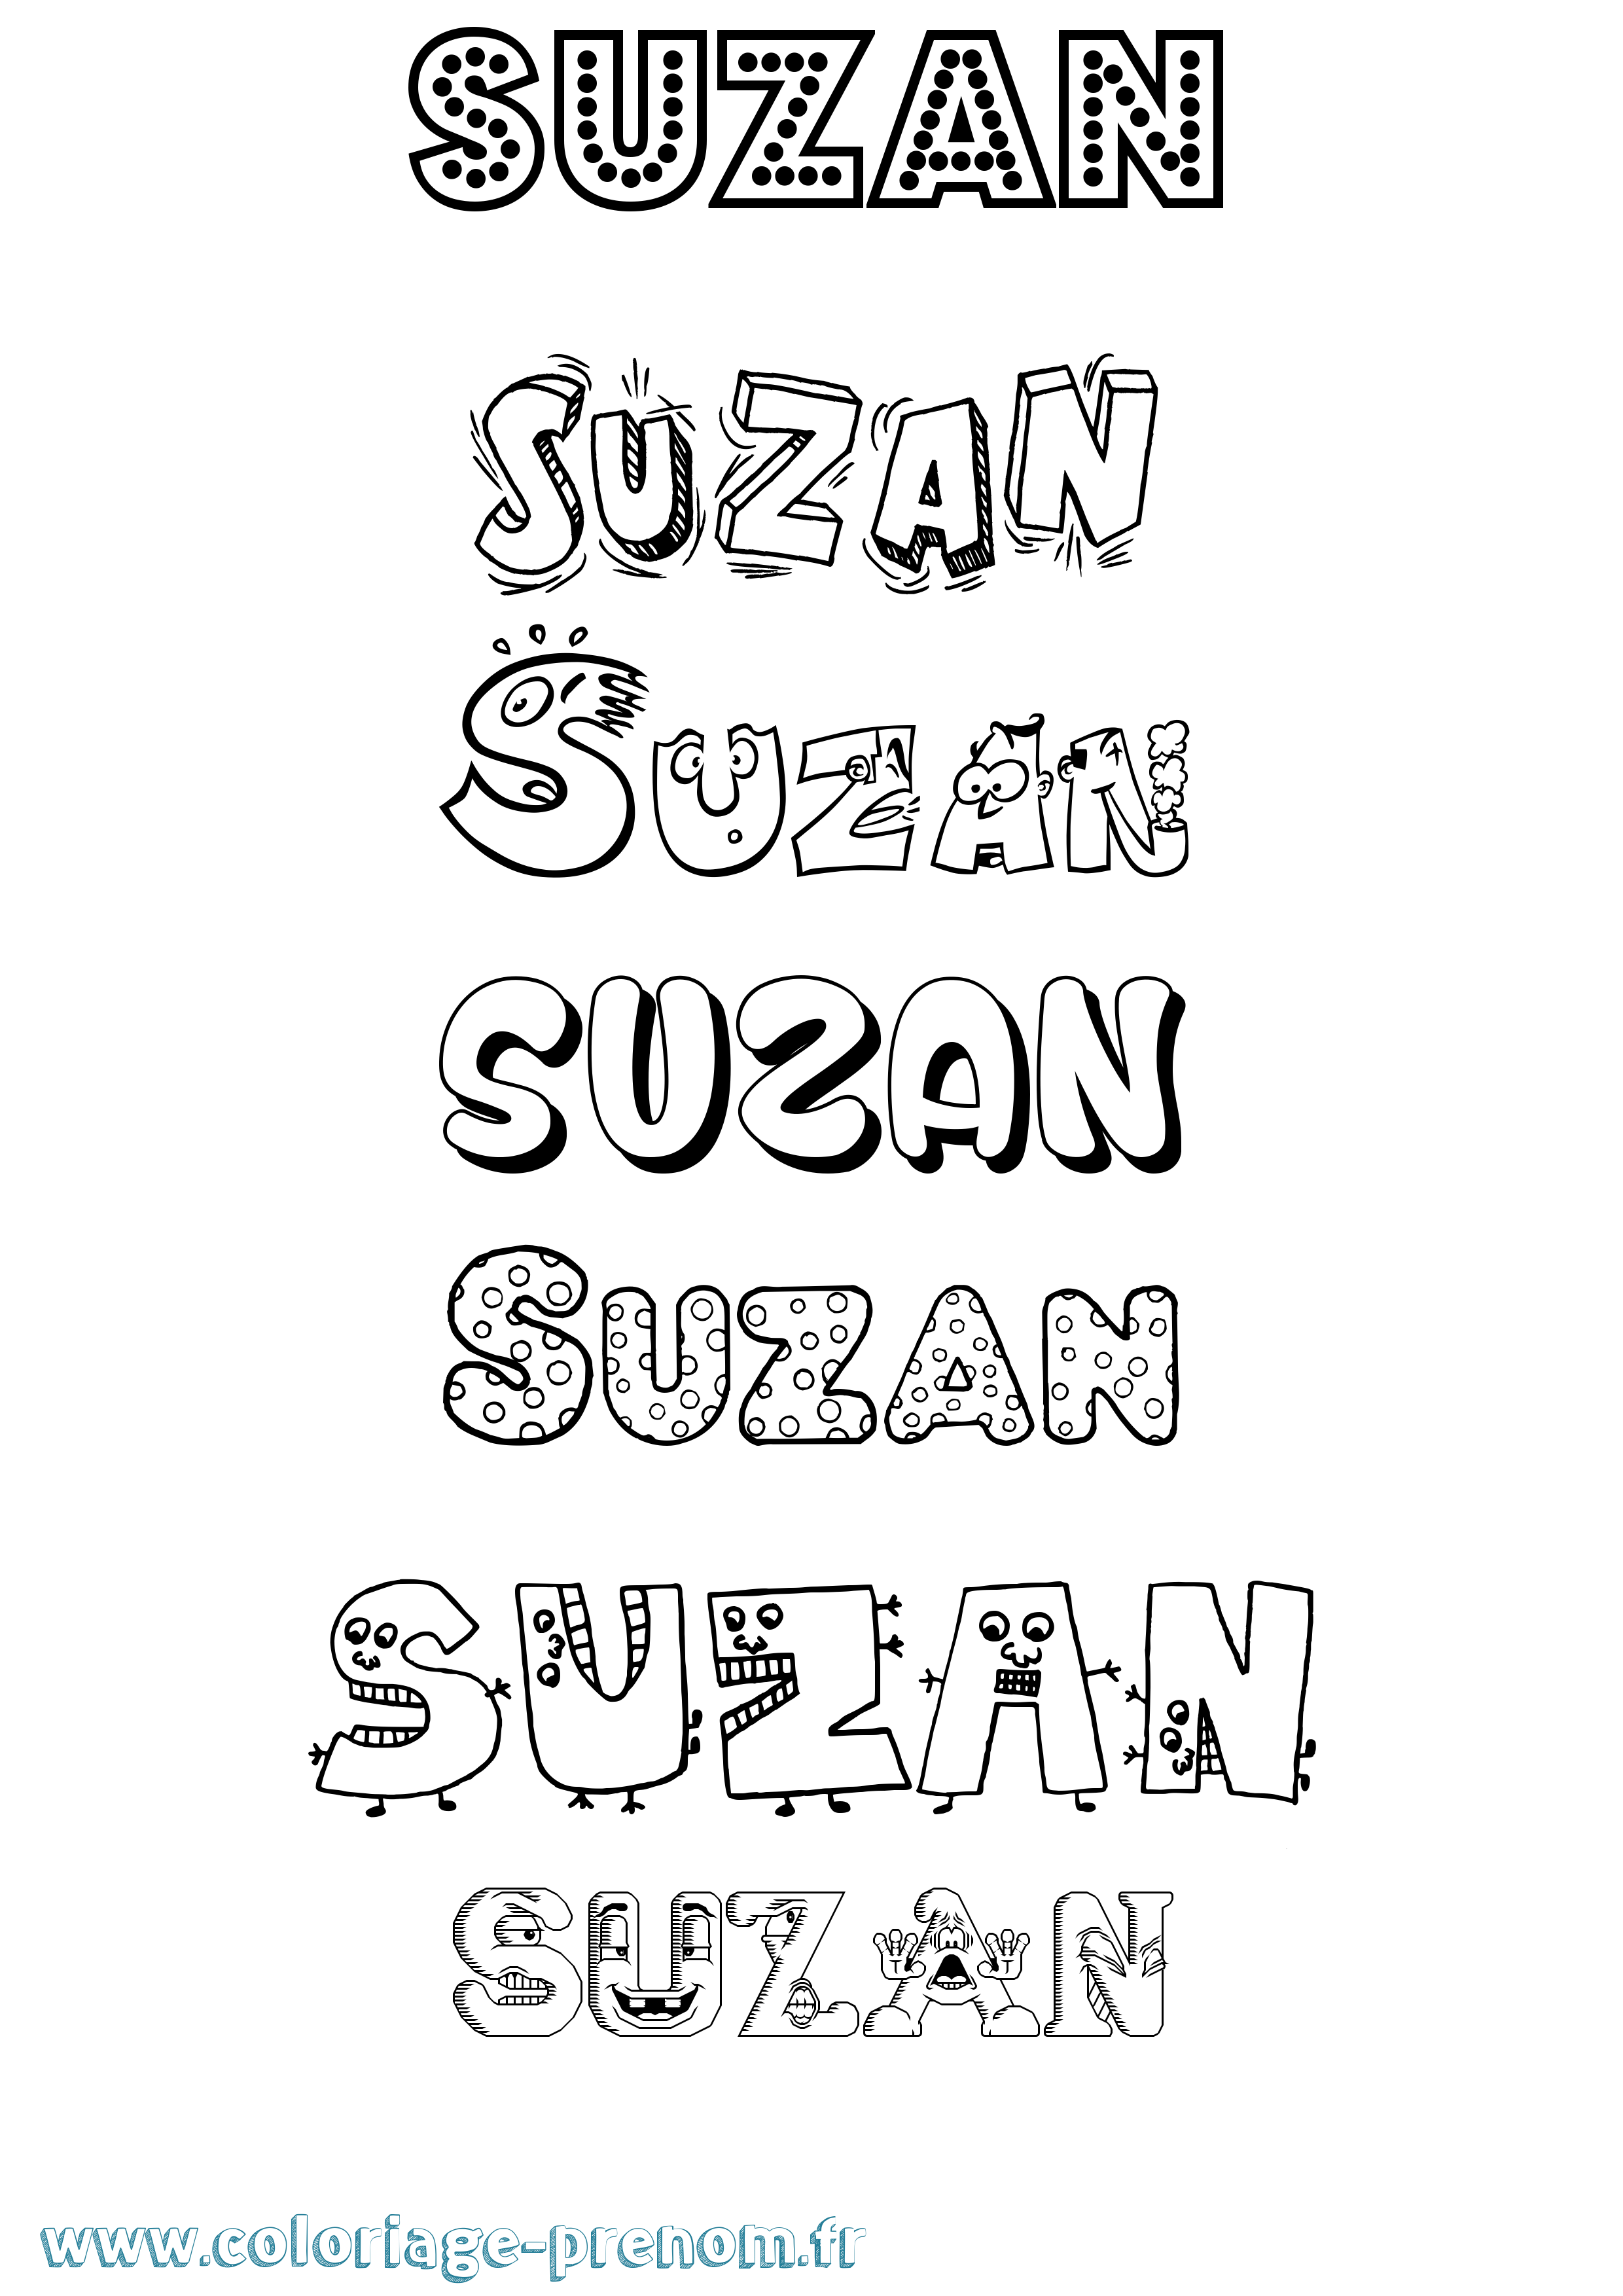 Coloriage prénom Suzan Fun